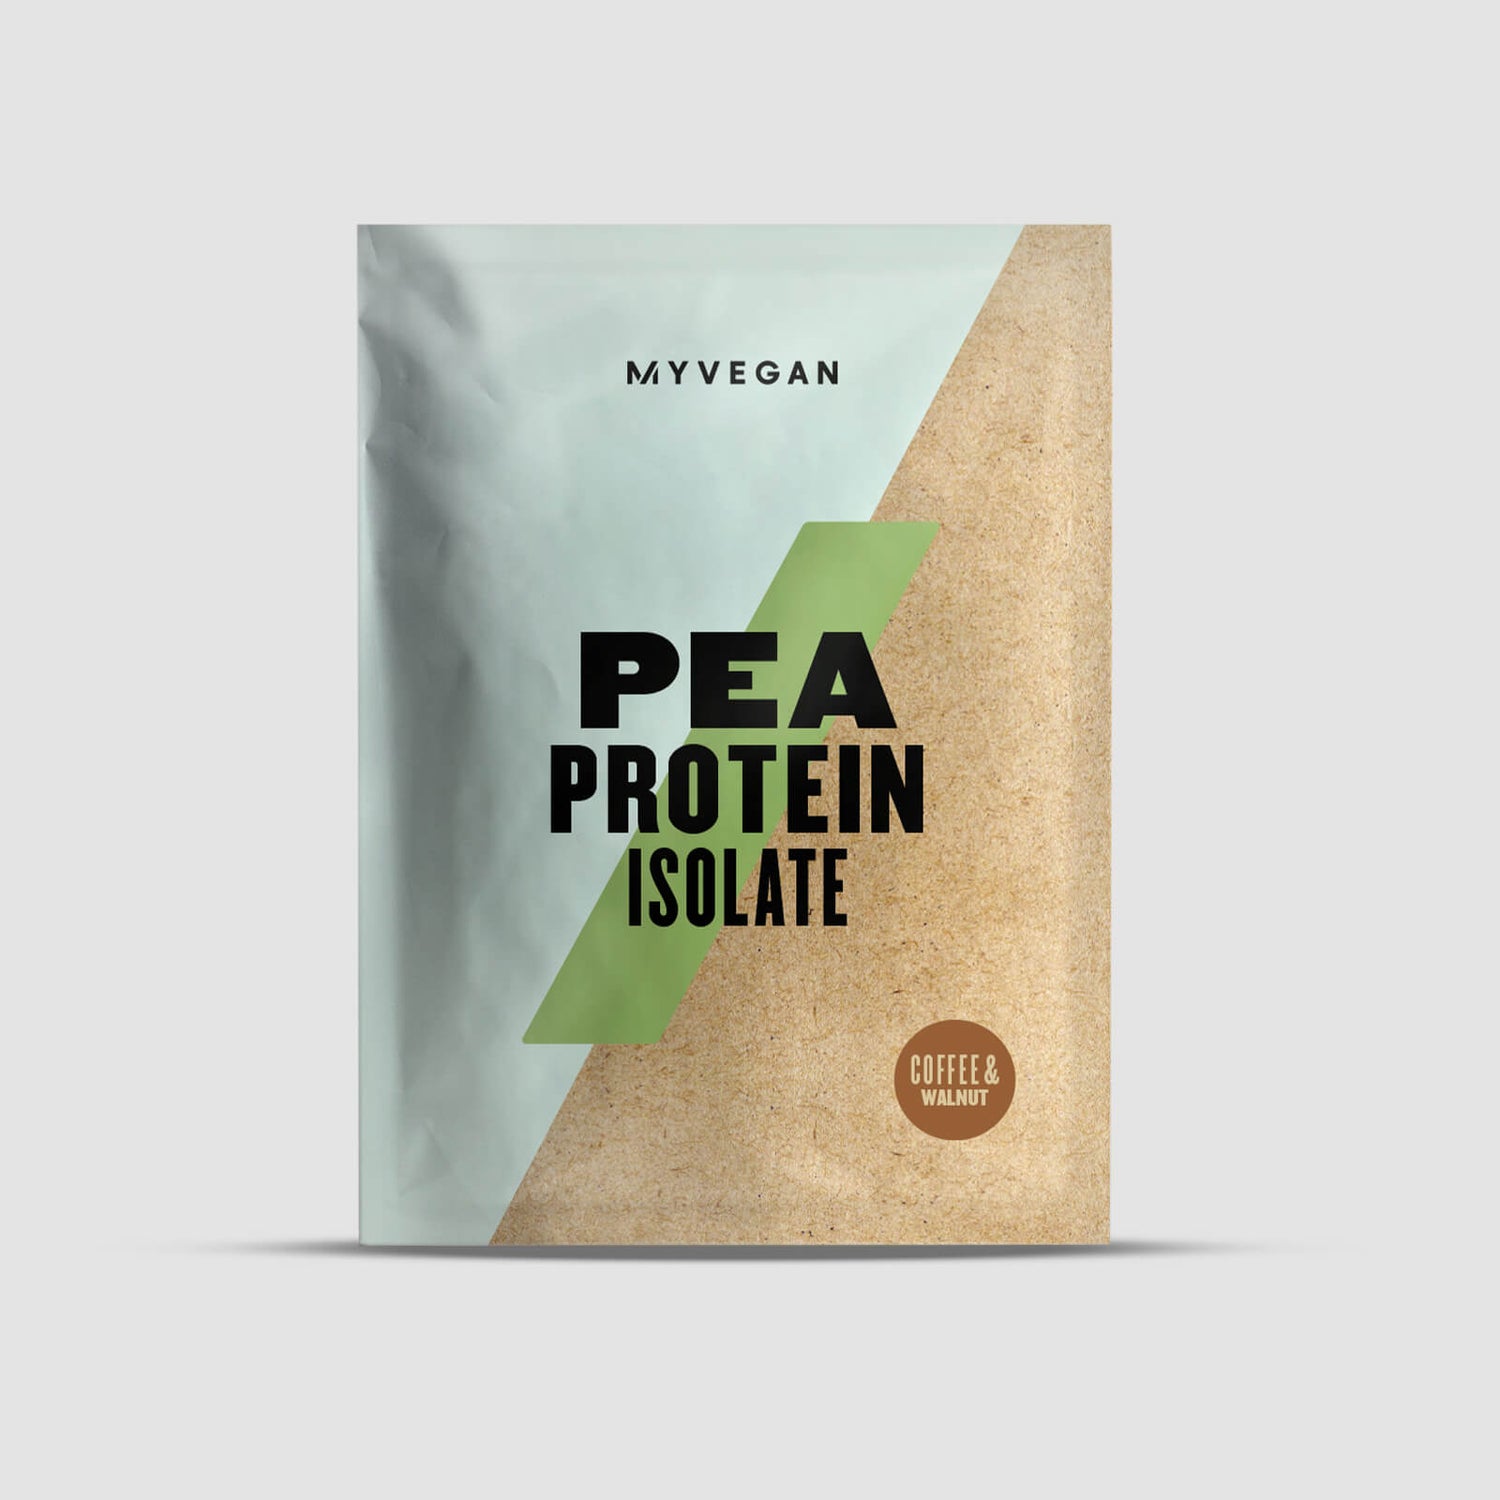 Myvegan Pea Protein Isolate - Coffee & Walnut